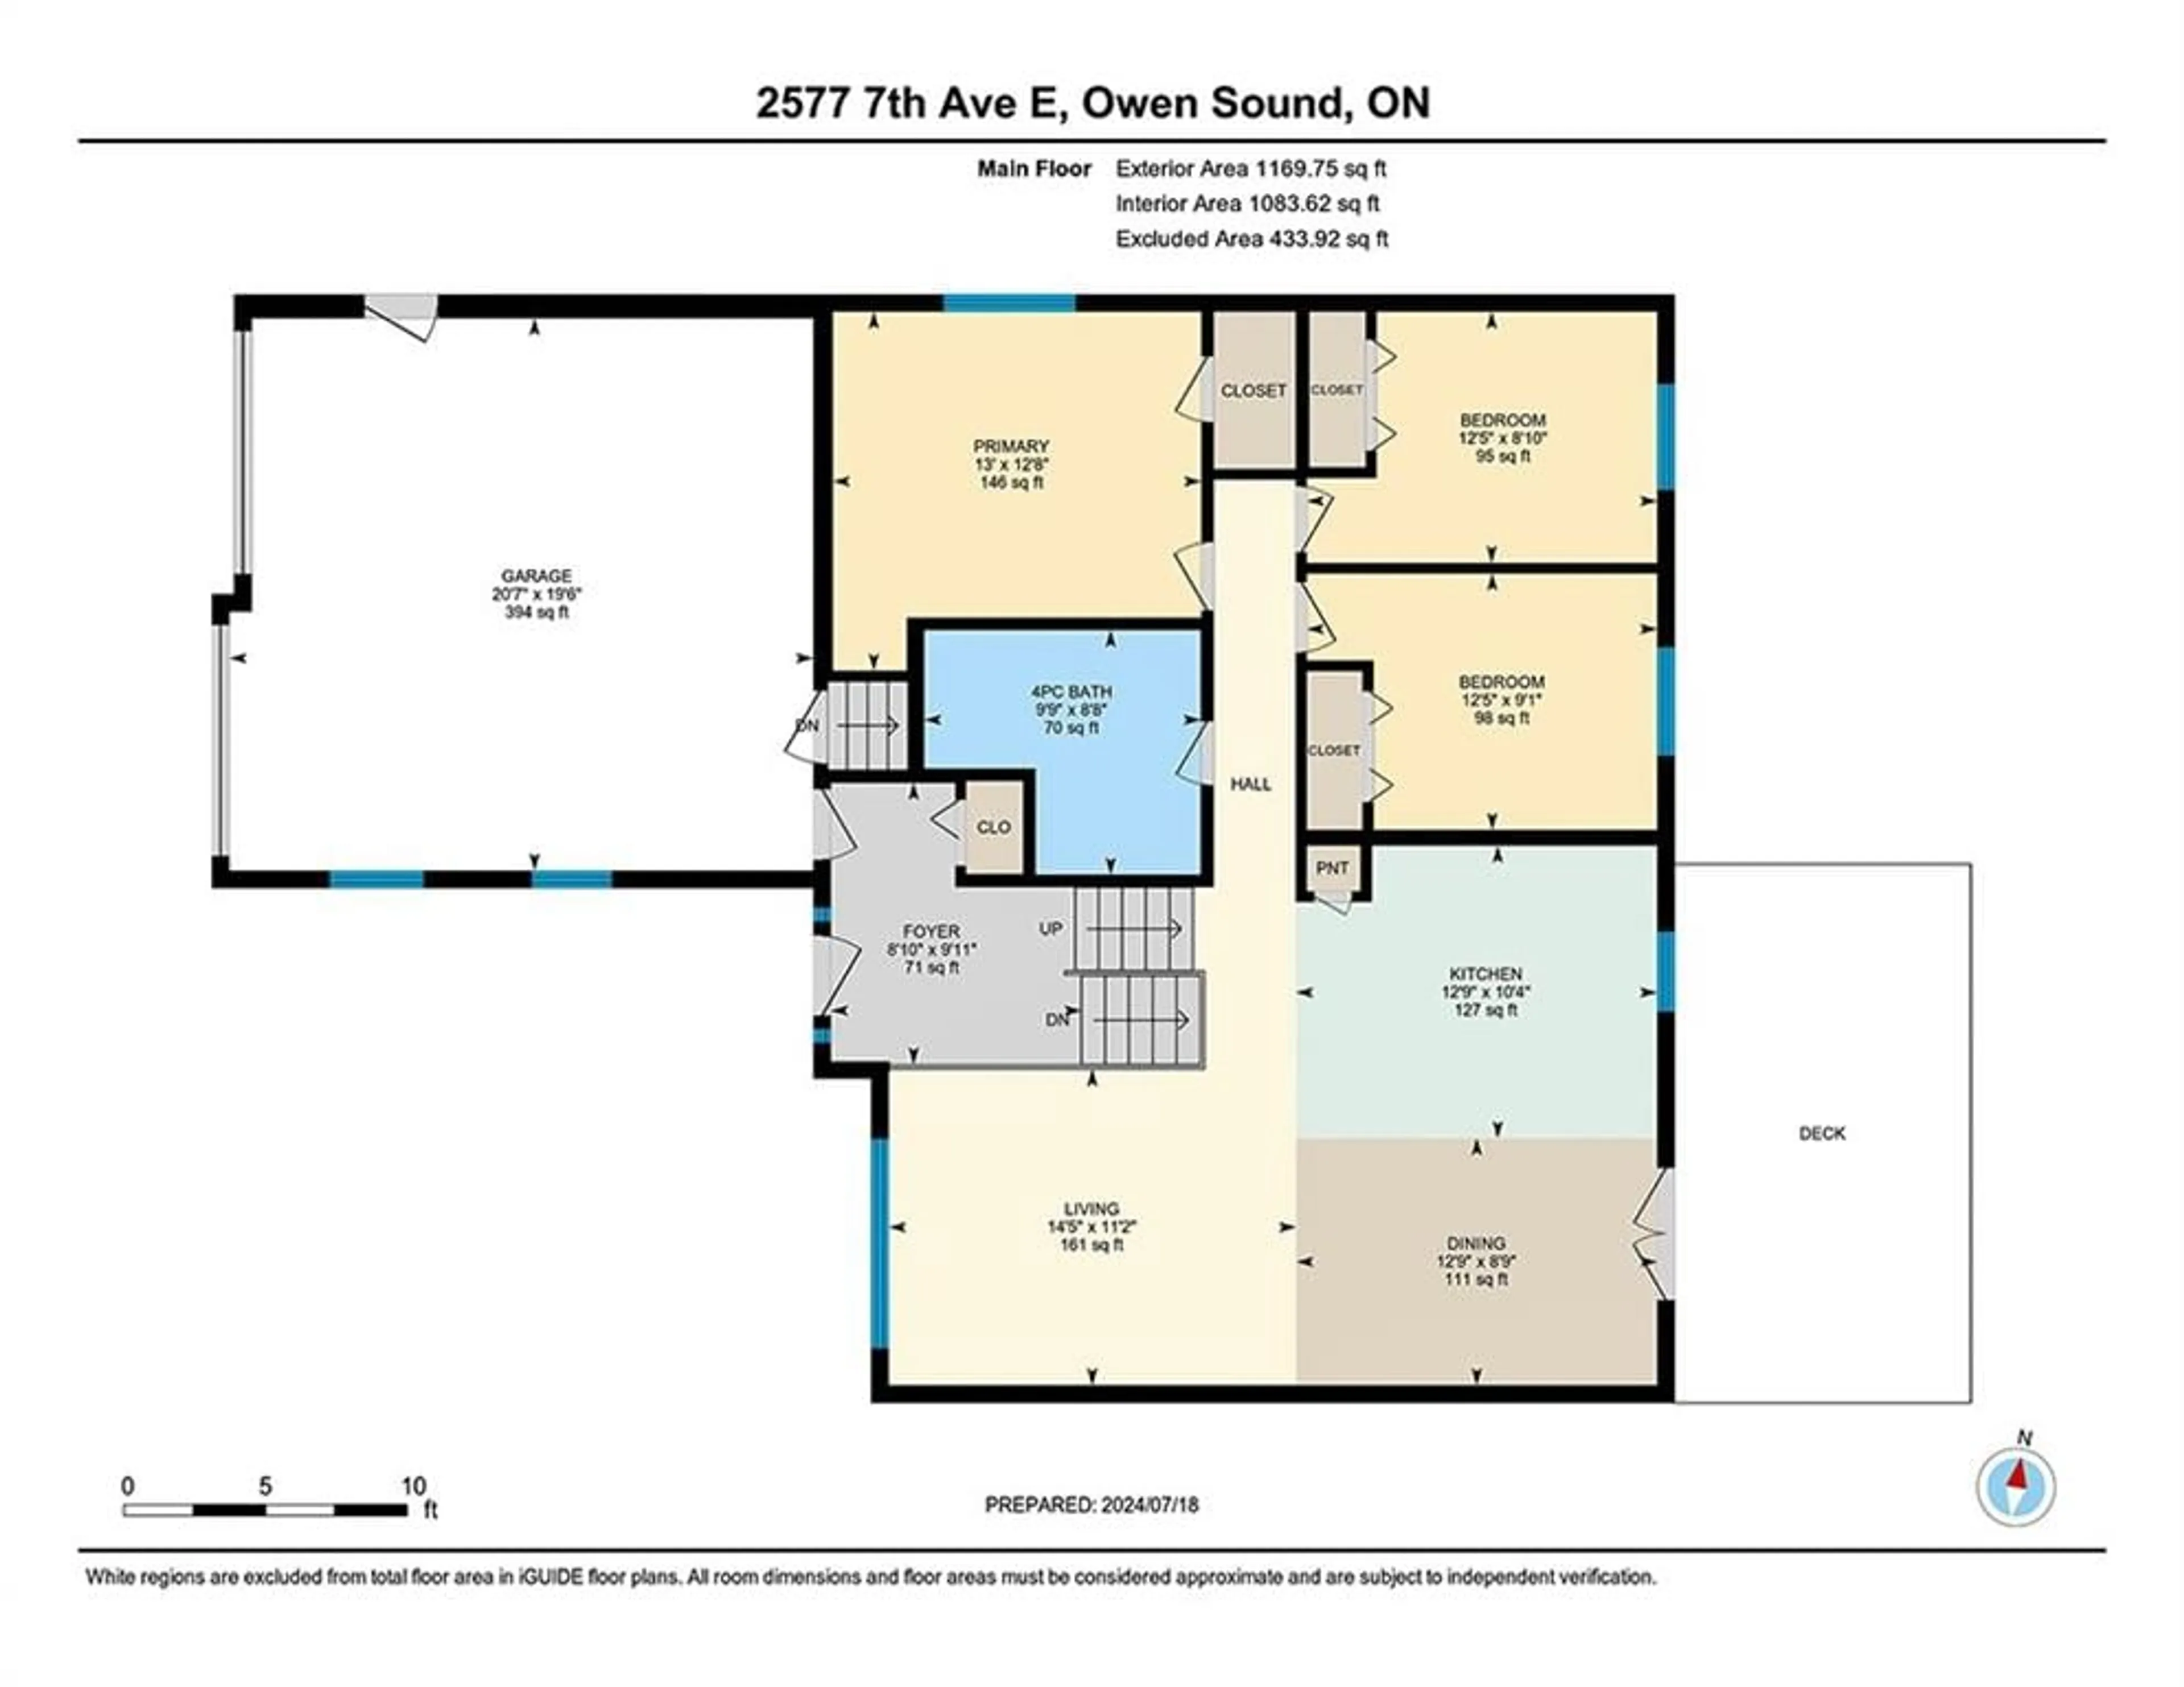 Floor plan for 2577 7th Ave, Owen Sound Ontario N4K 6V1